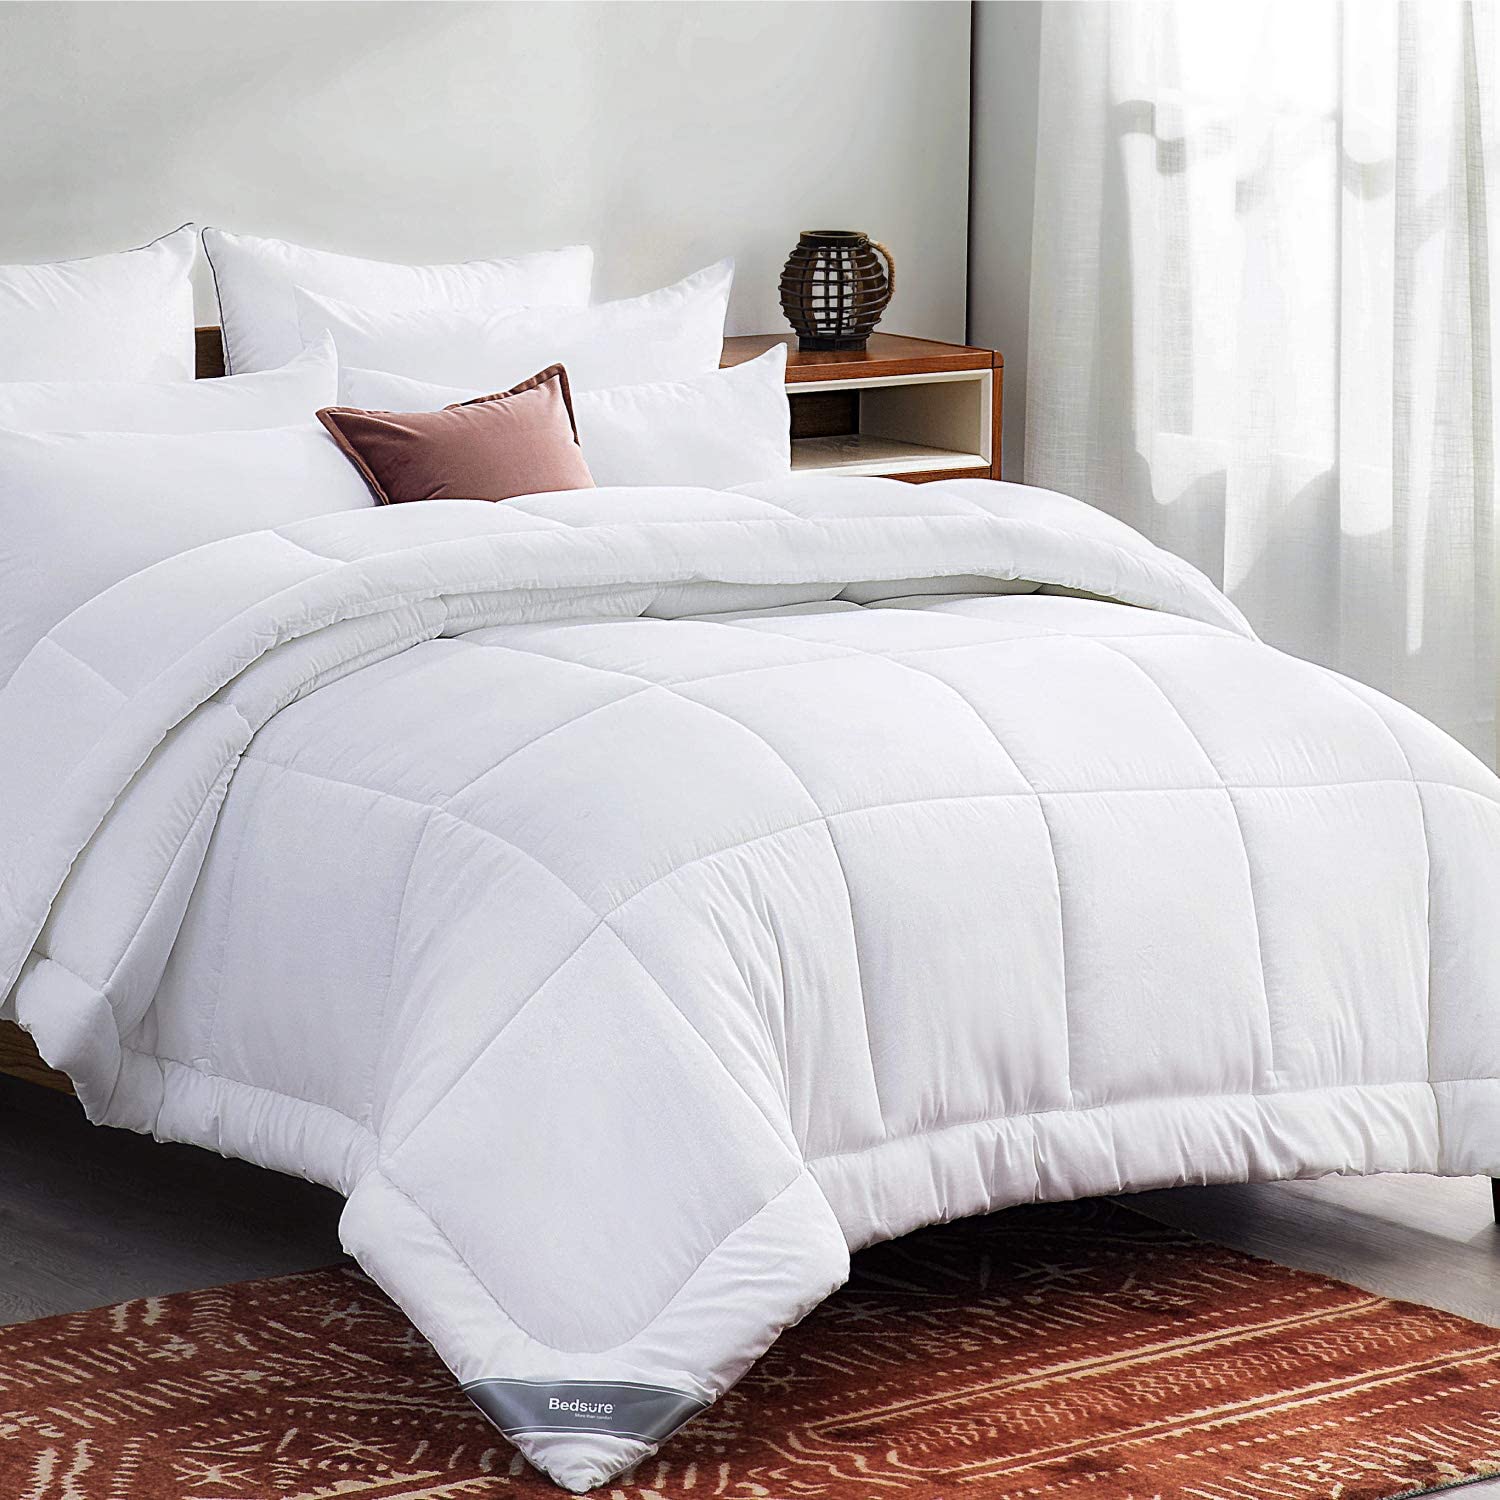 Bedsure Quilted Down-Alternative Duvet Comforter Insert, Queen